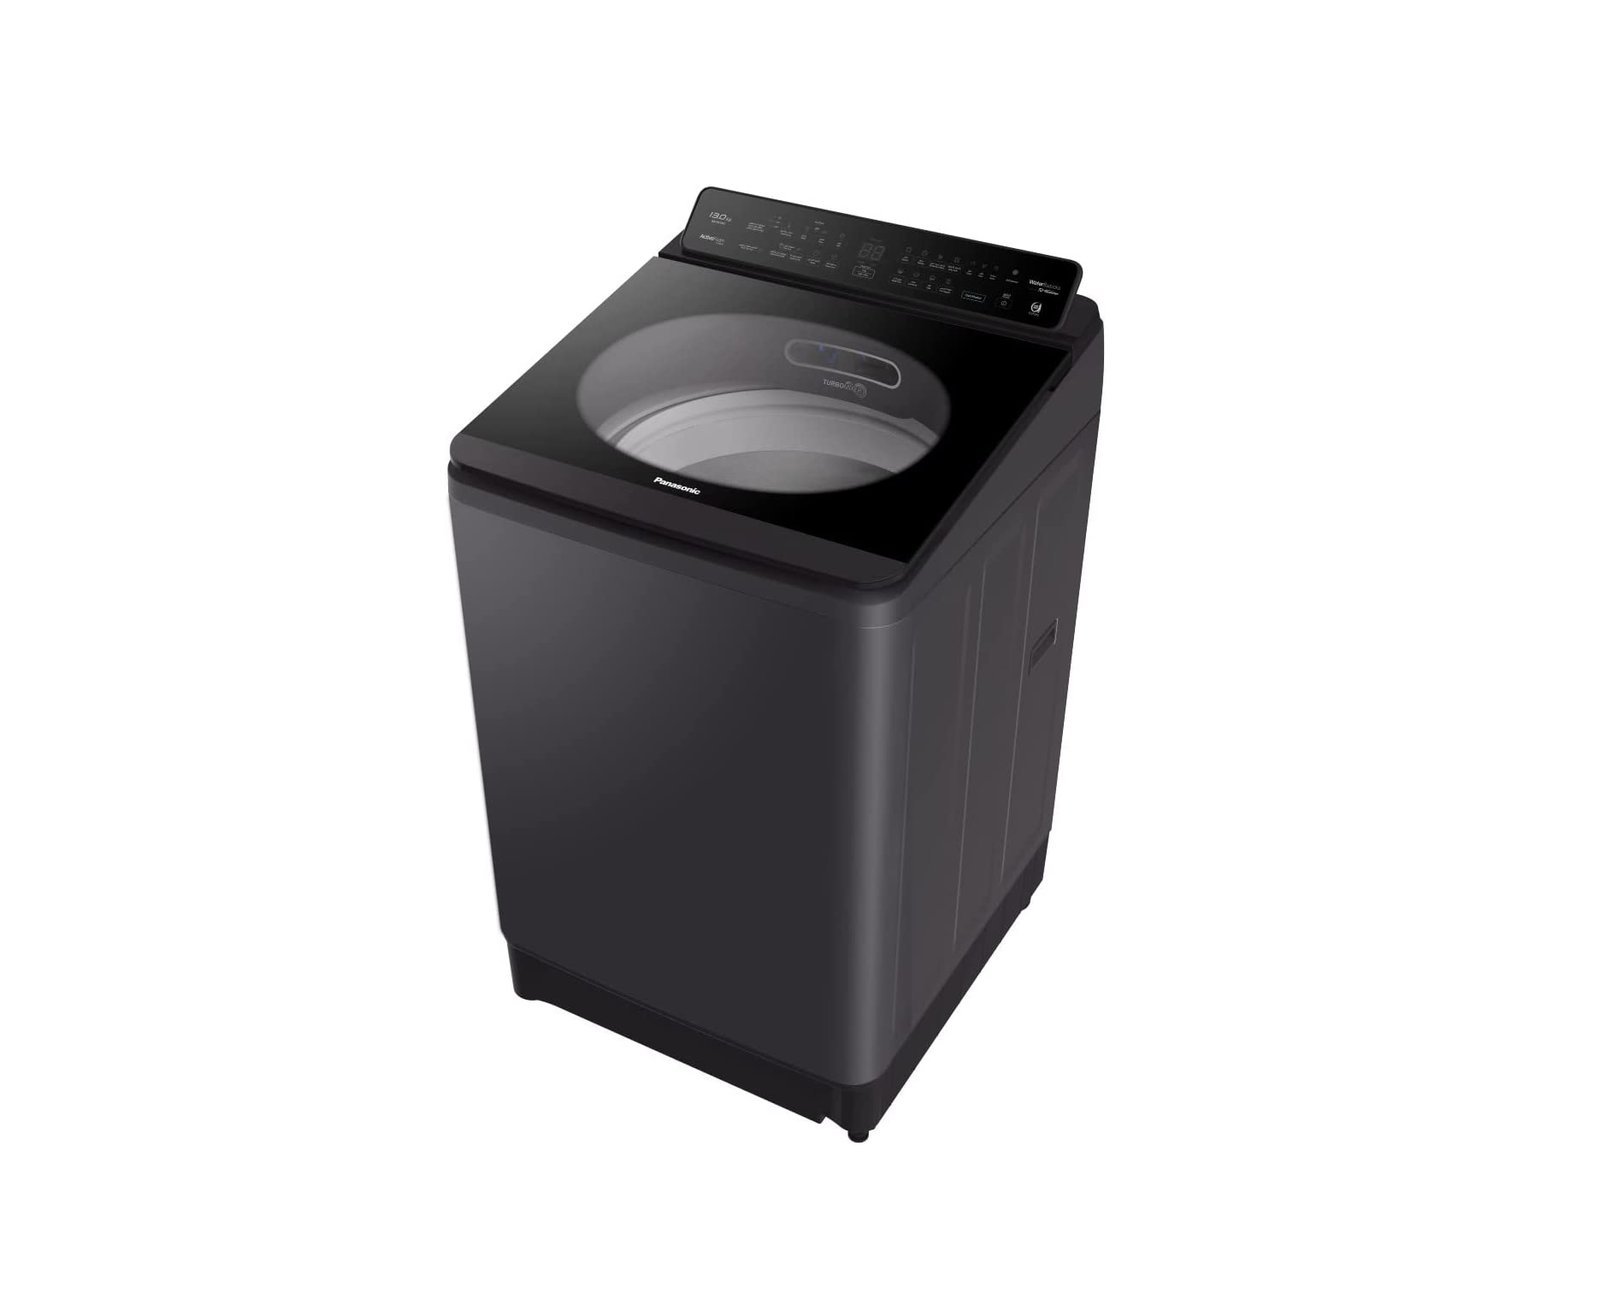 Panasonic 13 kg Top Load Washing Machine Color Black Model- NA-FD13X1 | 1 Year Warranty